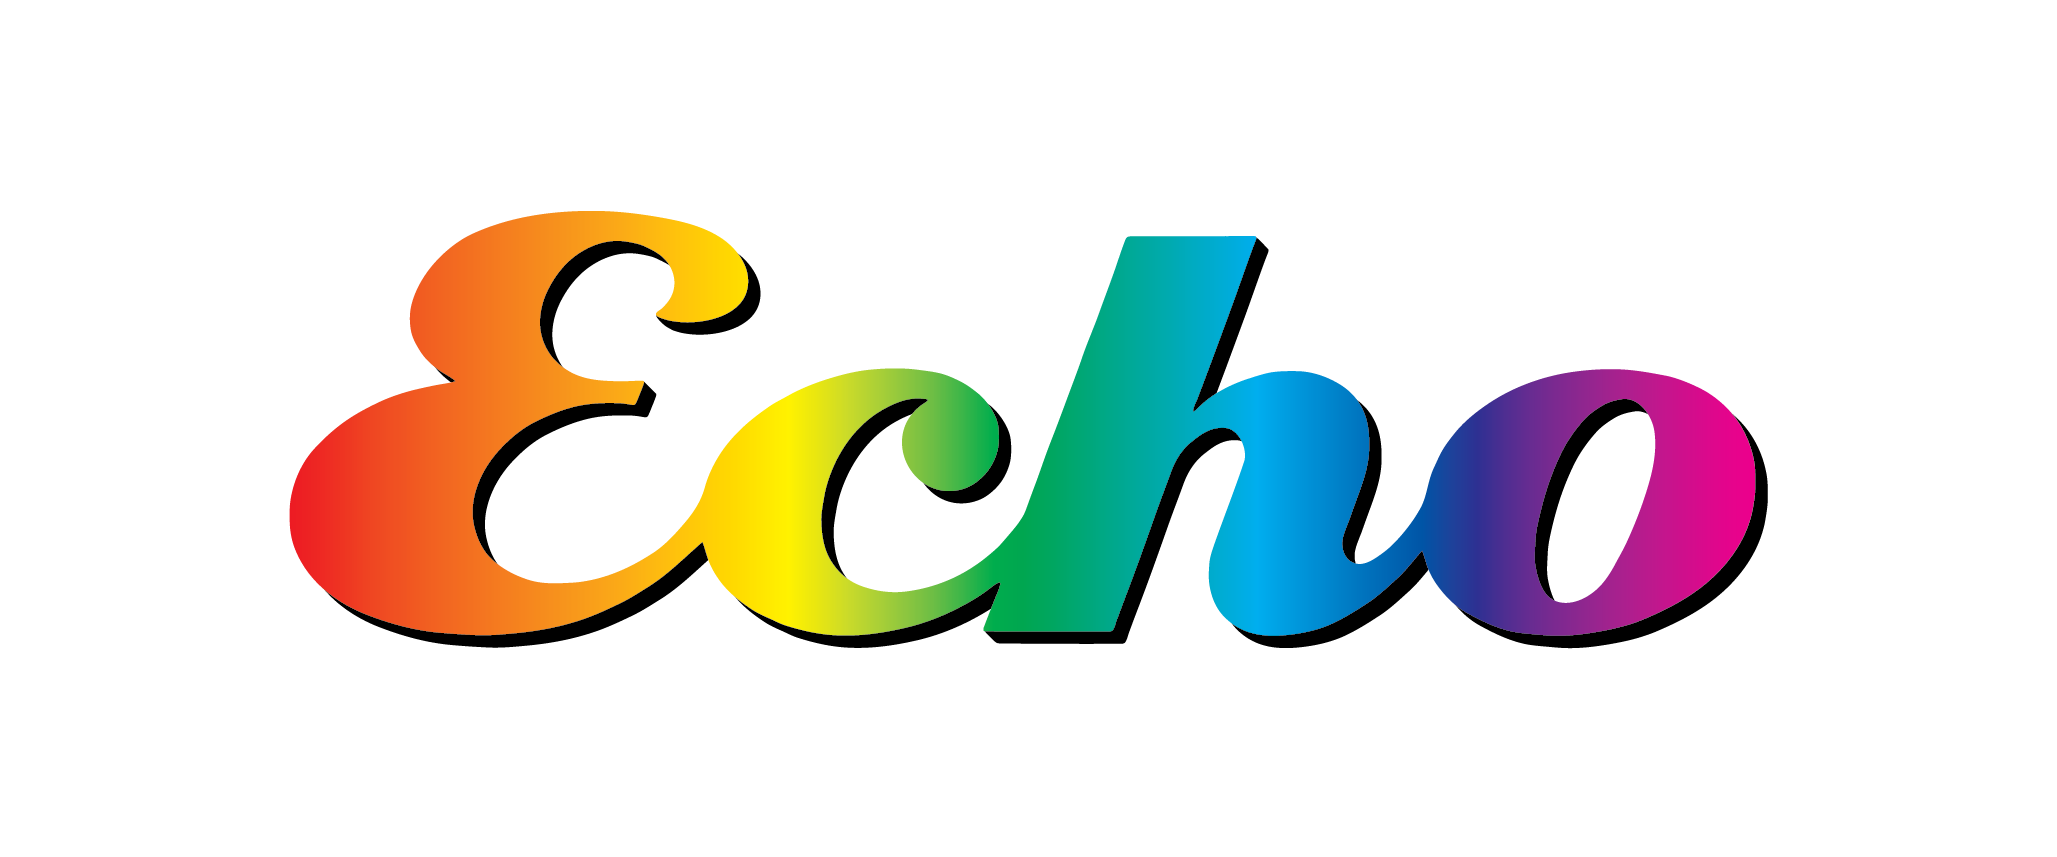 https://byronwritersfestival.com/wp-content/uploads/2021/06/Echo-logo.png